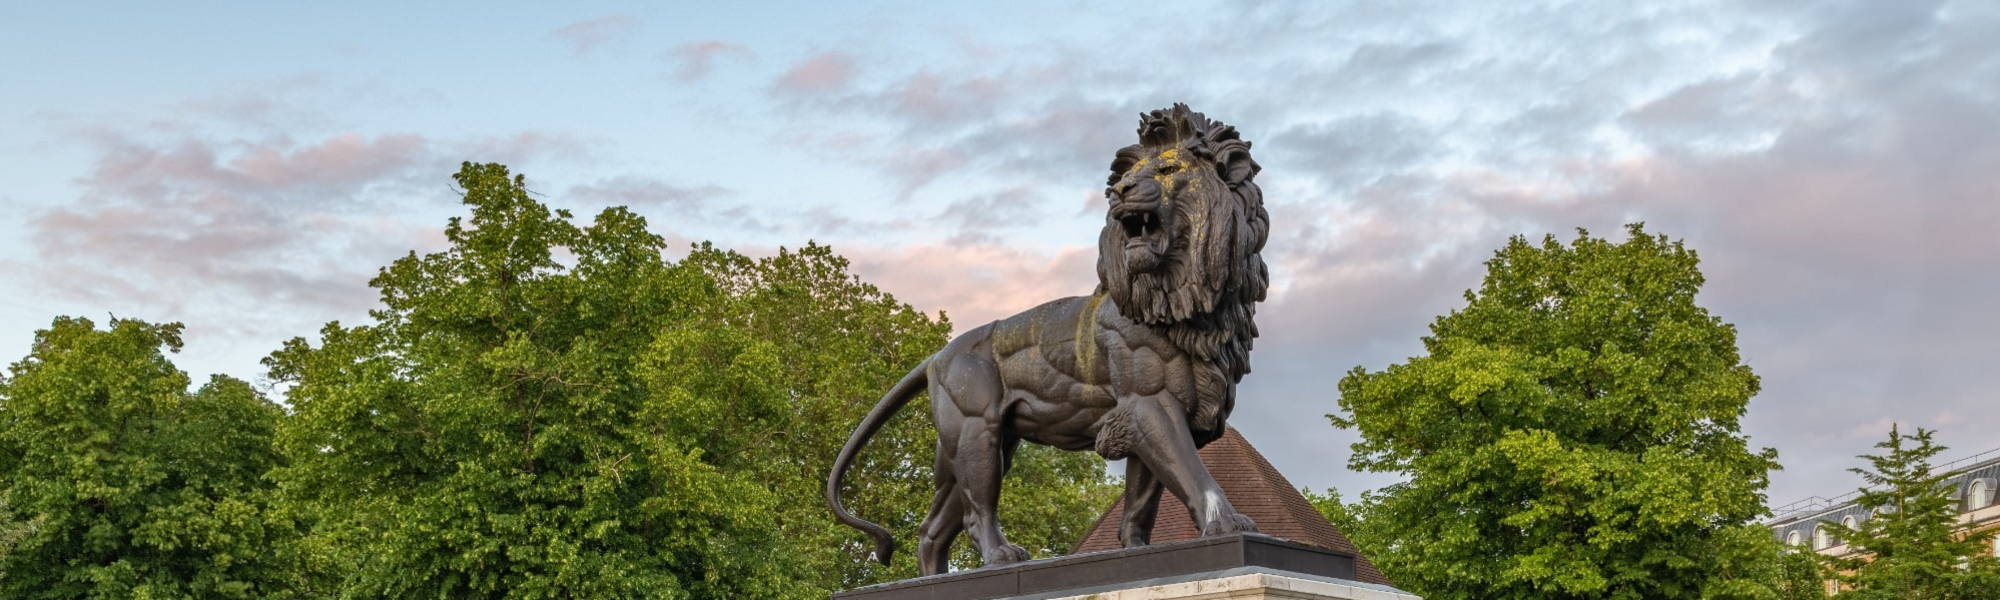 Maiwand Lion. Forbury Gardens Reading Berkshire UK.